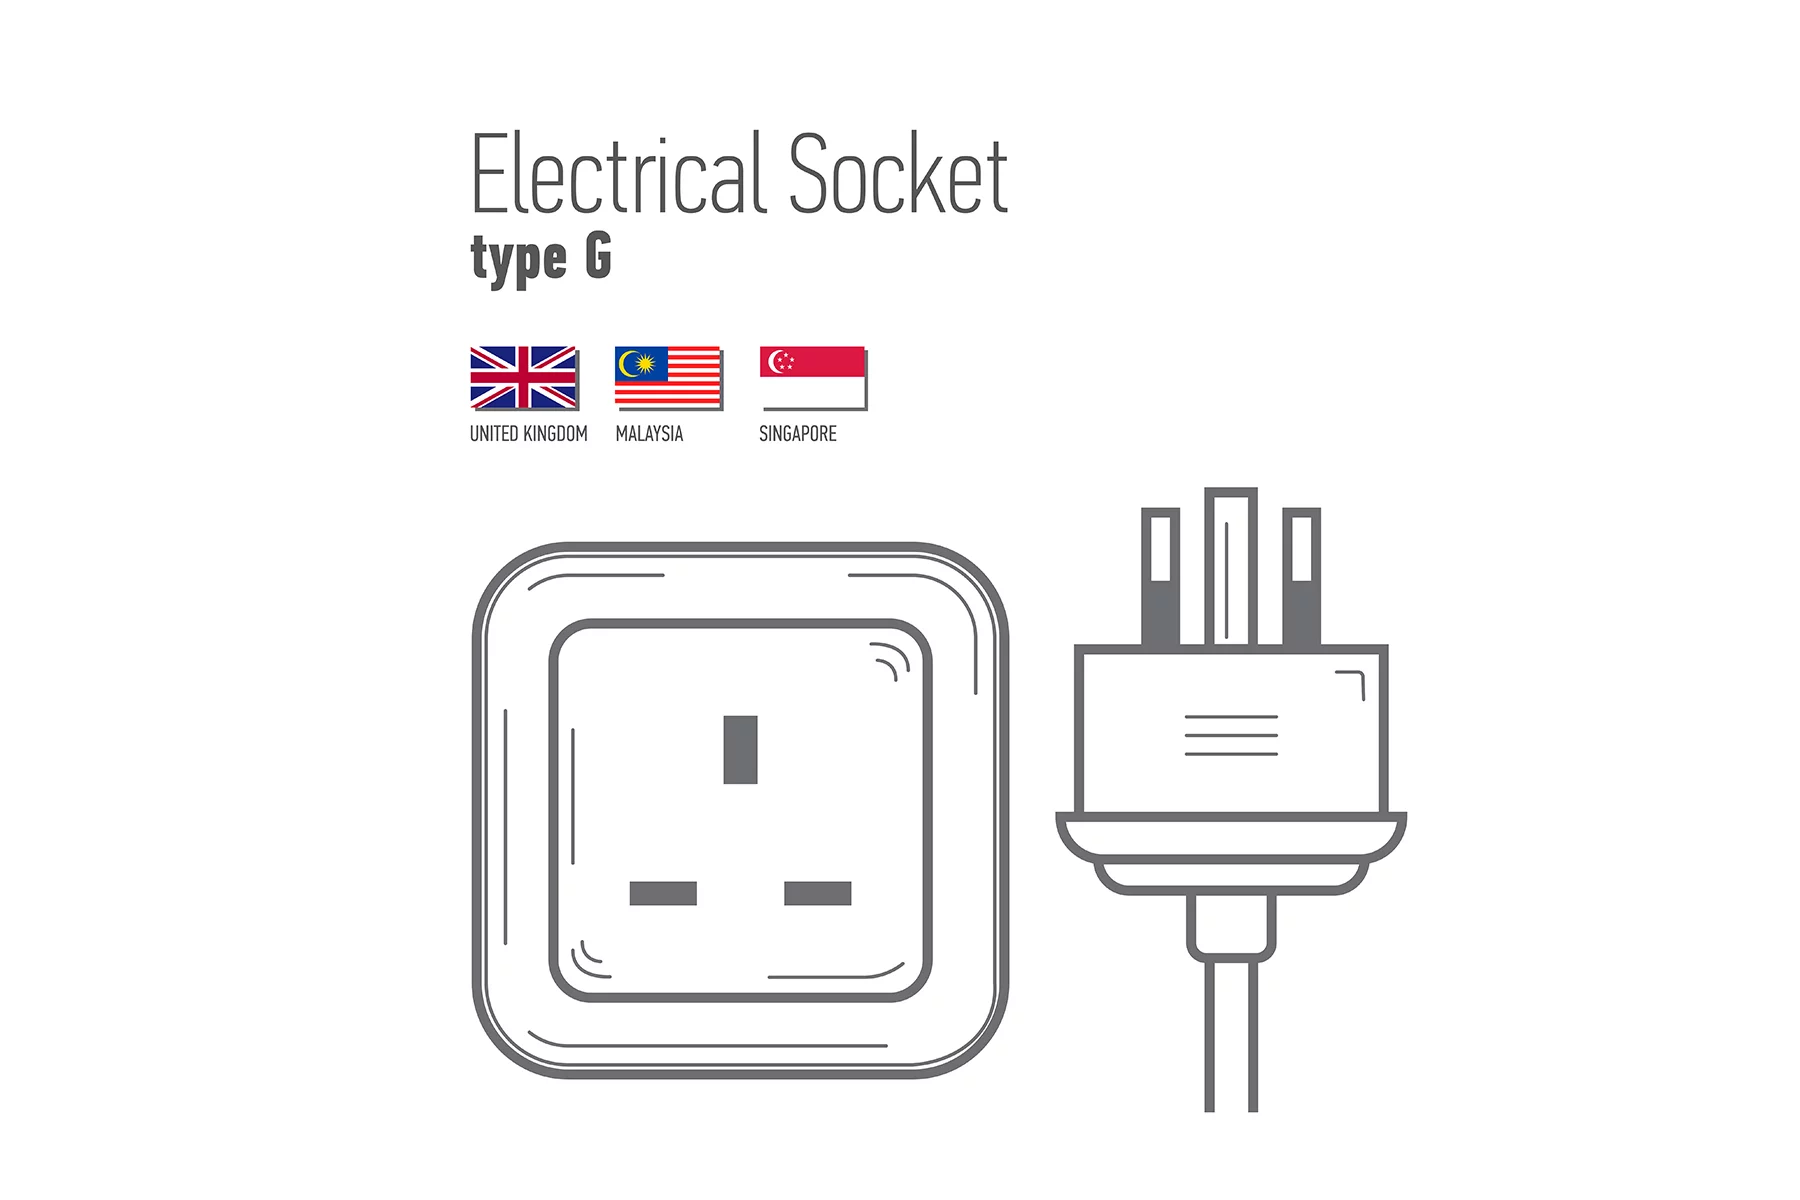 Type G electrical socket